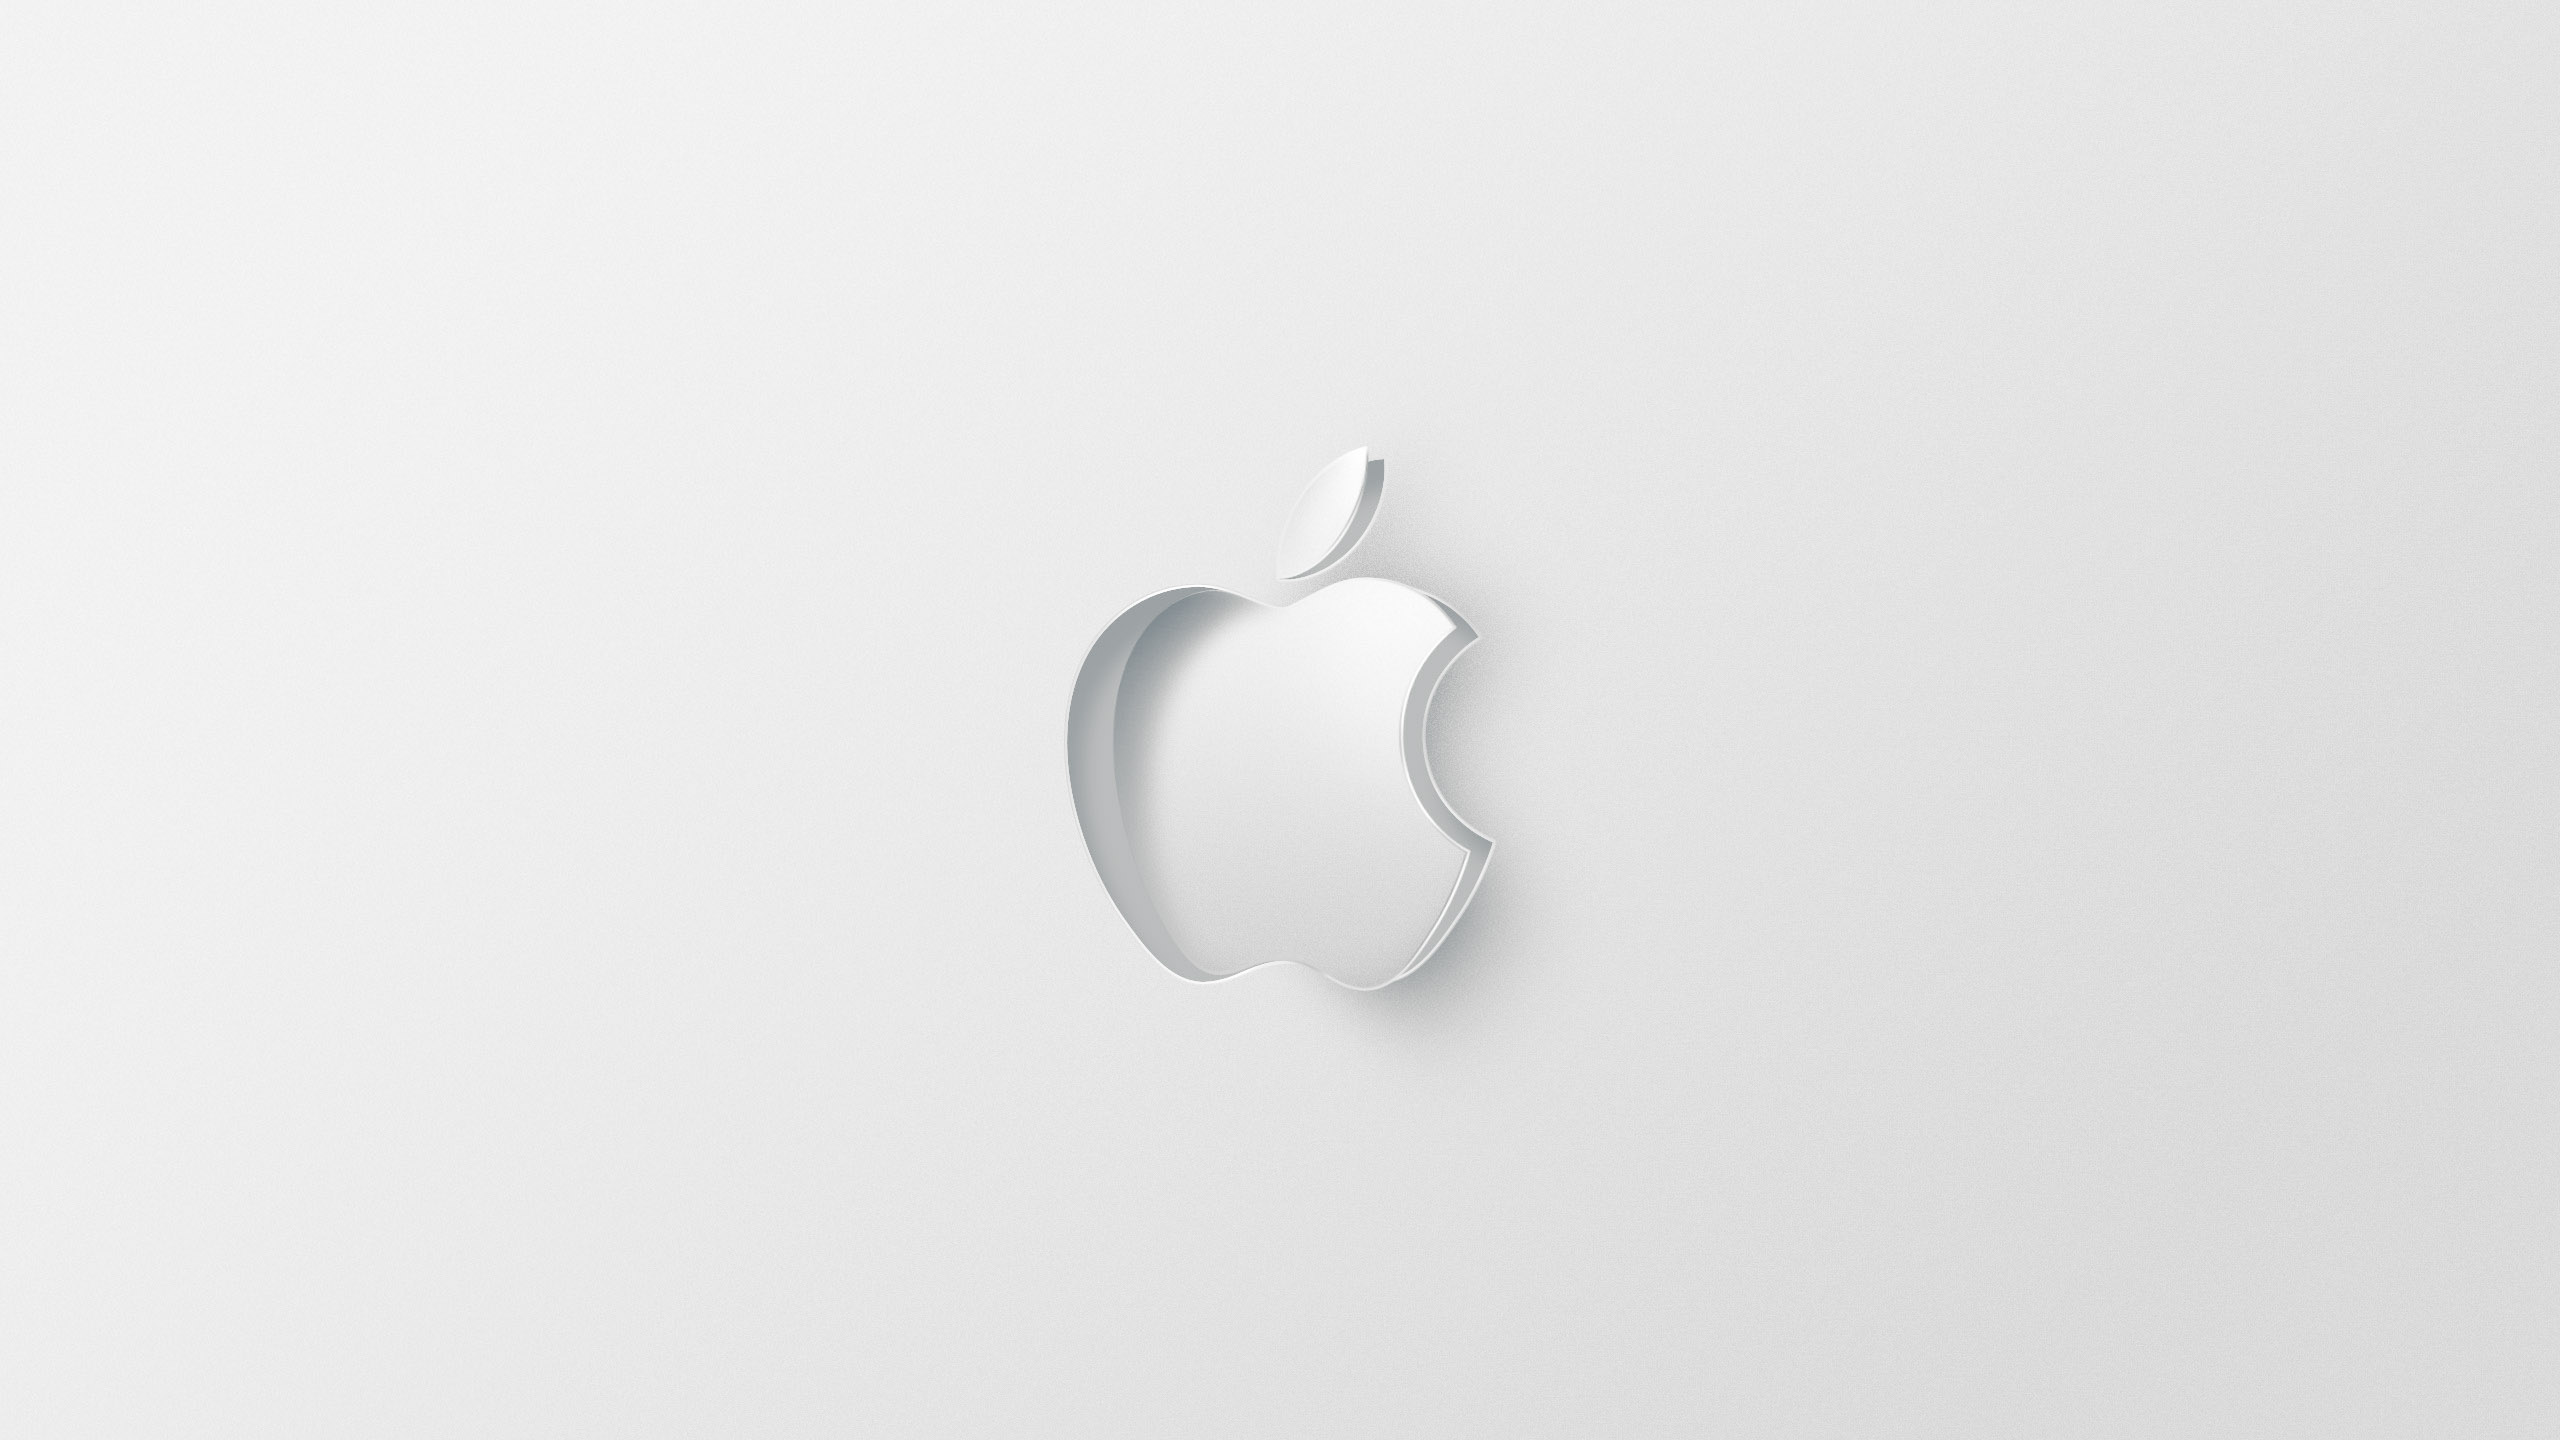 Mac Apple Wallpapers on Pinterest | Apple Wallpaper, Mac Wallpaper ...